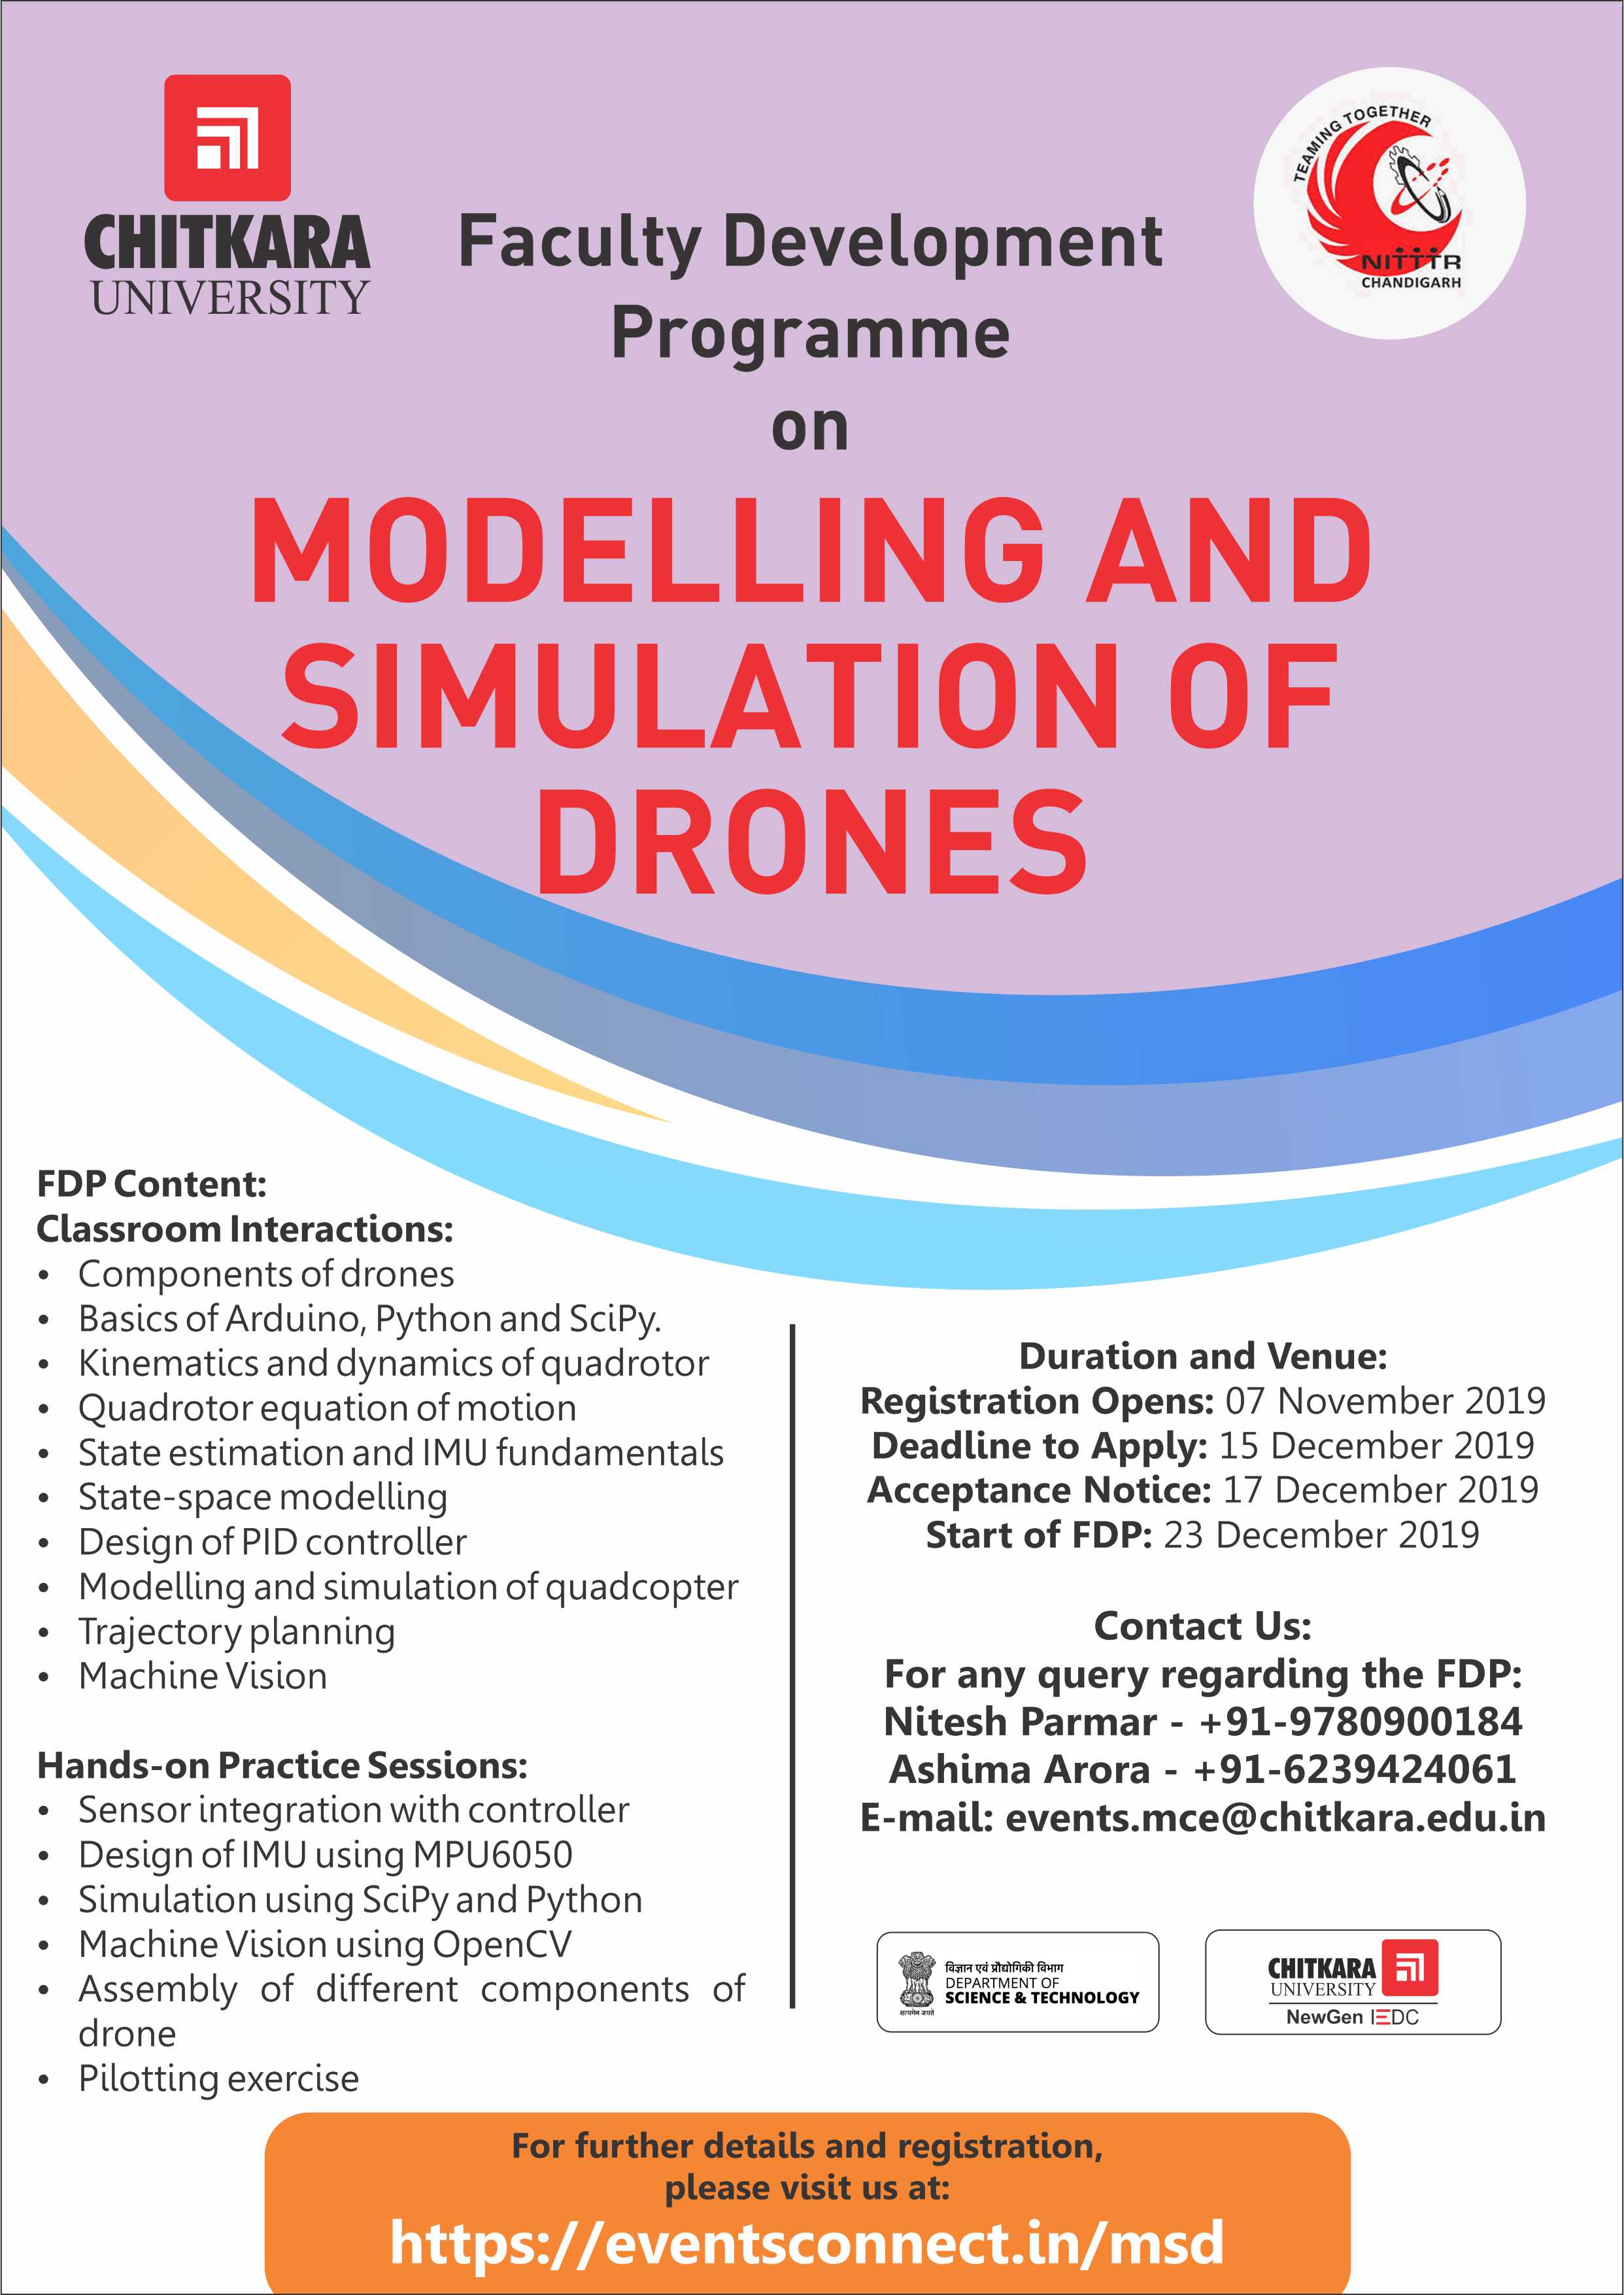 Faculty Development Program on 'Modelling & Simulation of Drones' at Chitkara University.